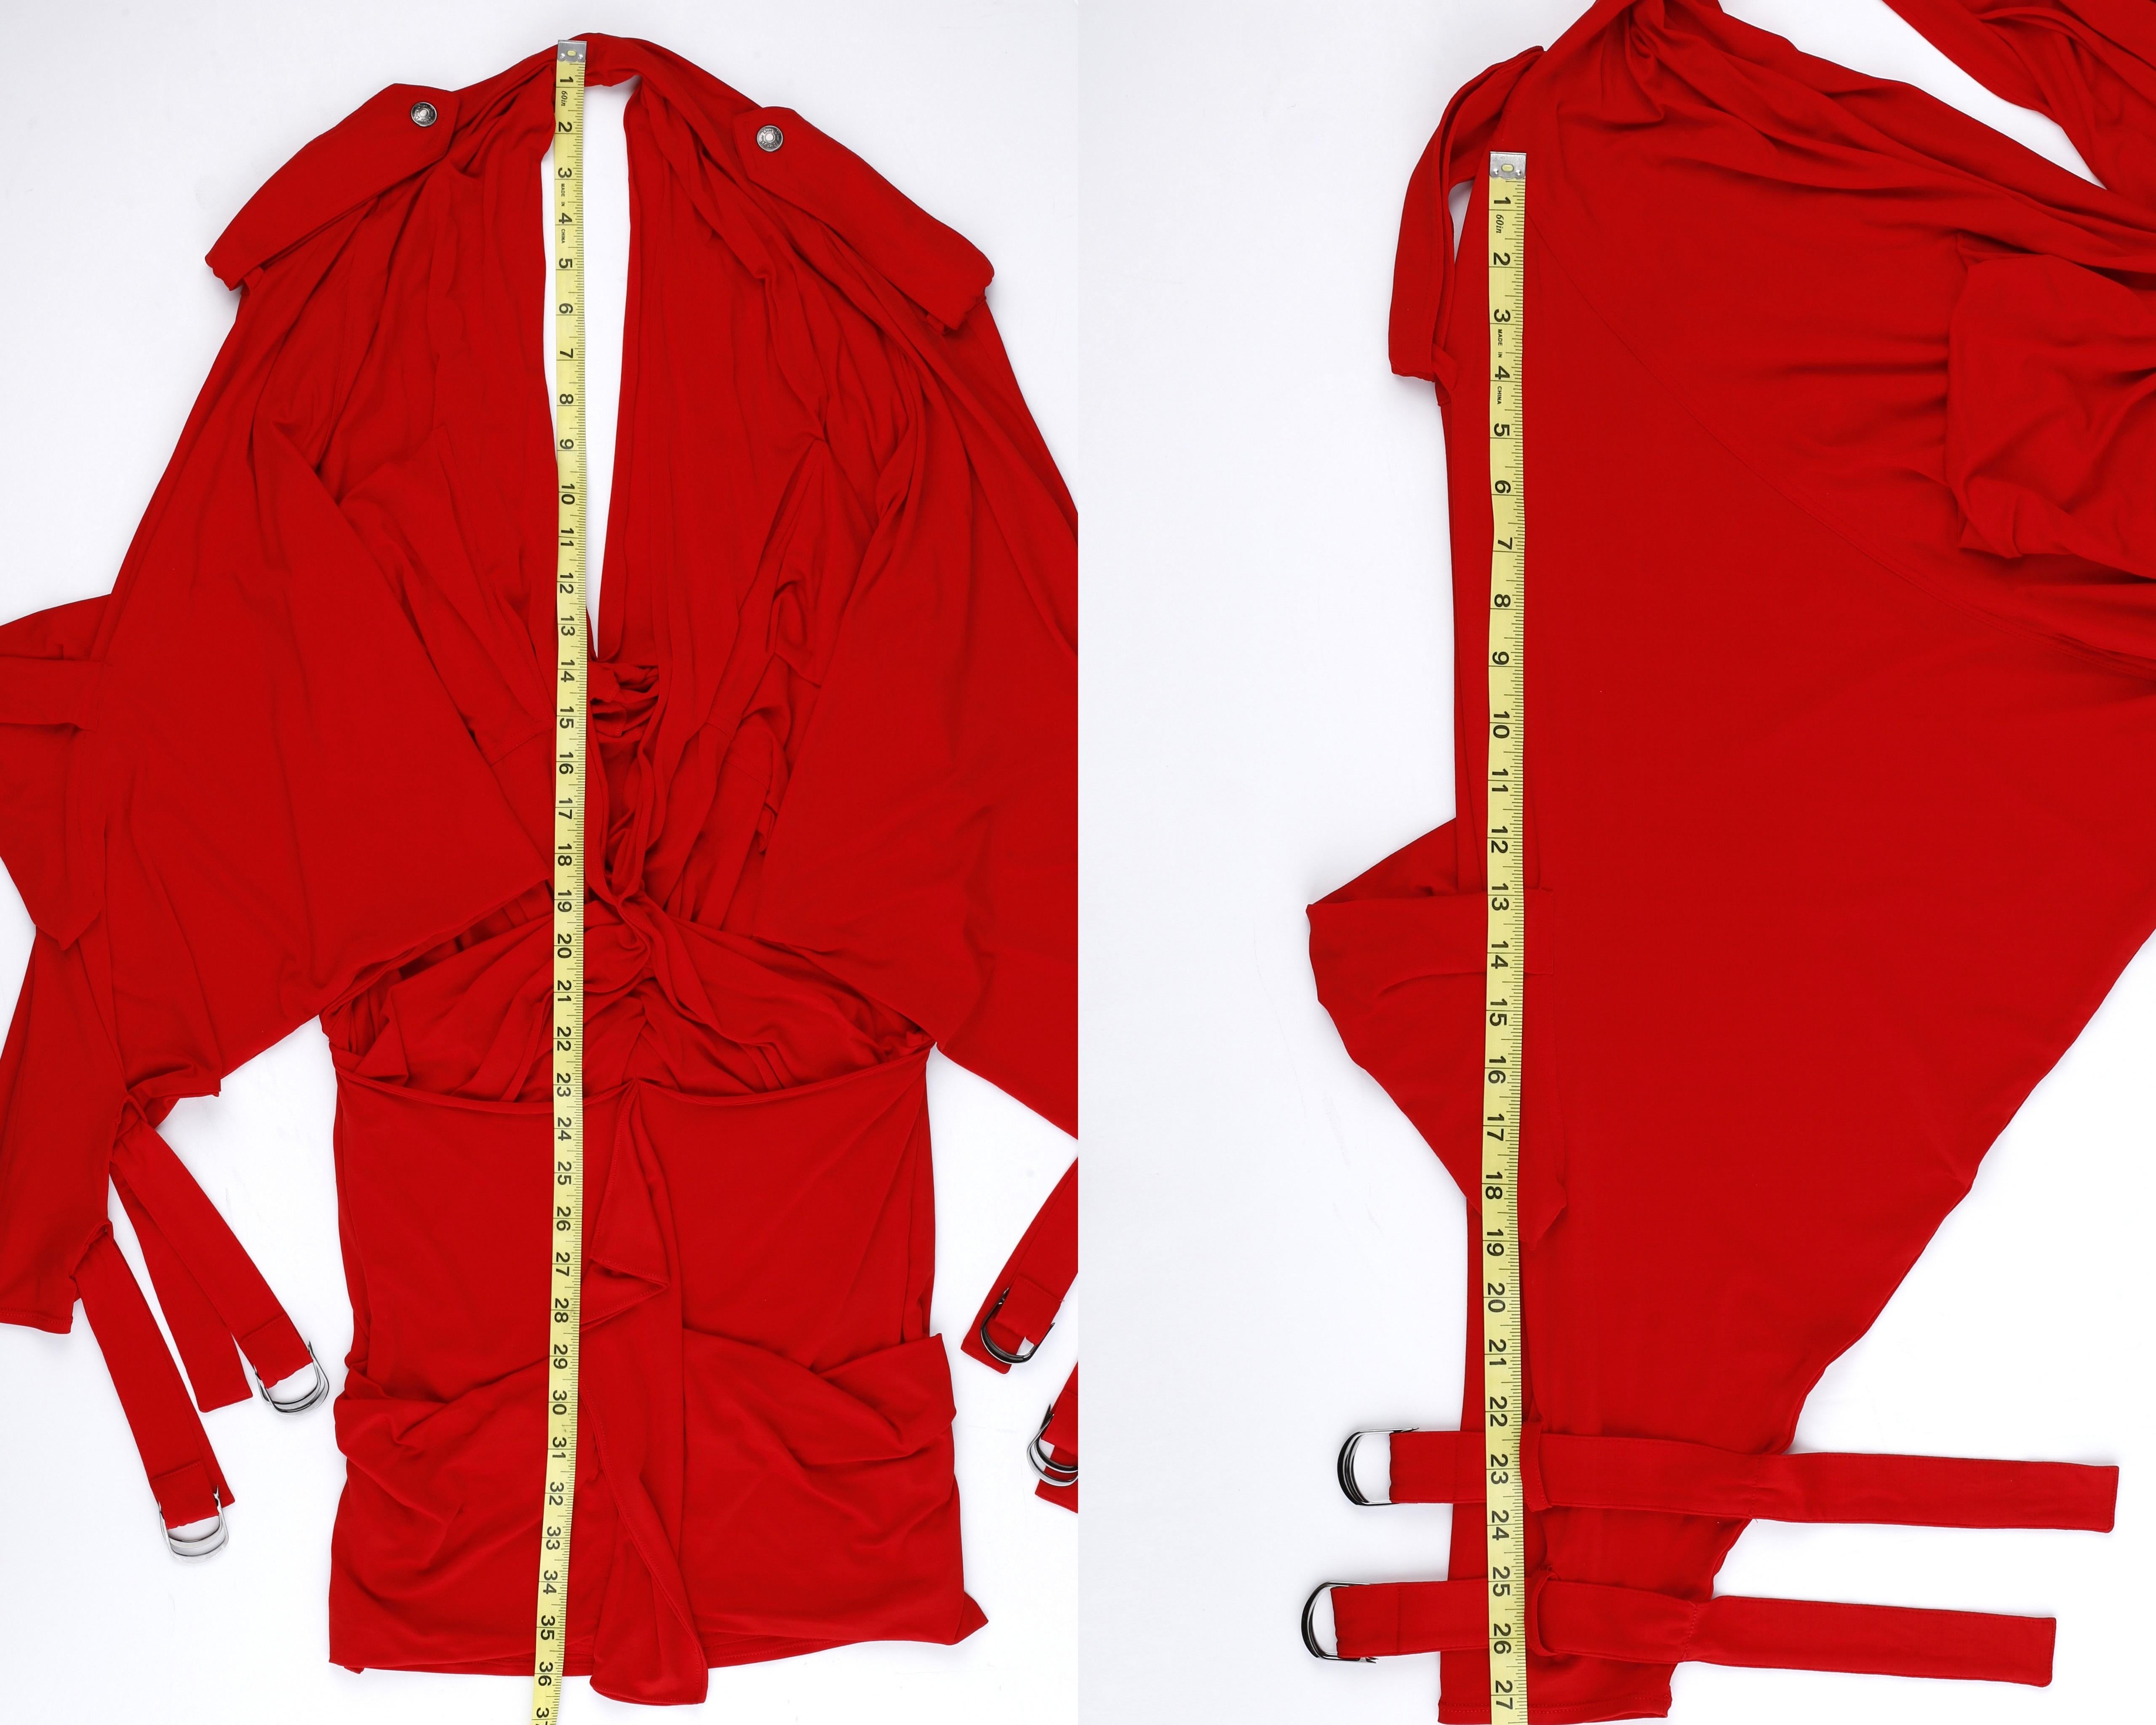 Christian Dior John Galliano S/S 2003 Red Plunge Draped Pocket Mini Dress For Sale 8